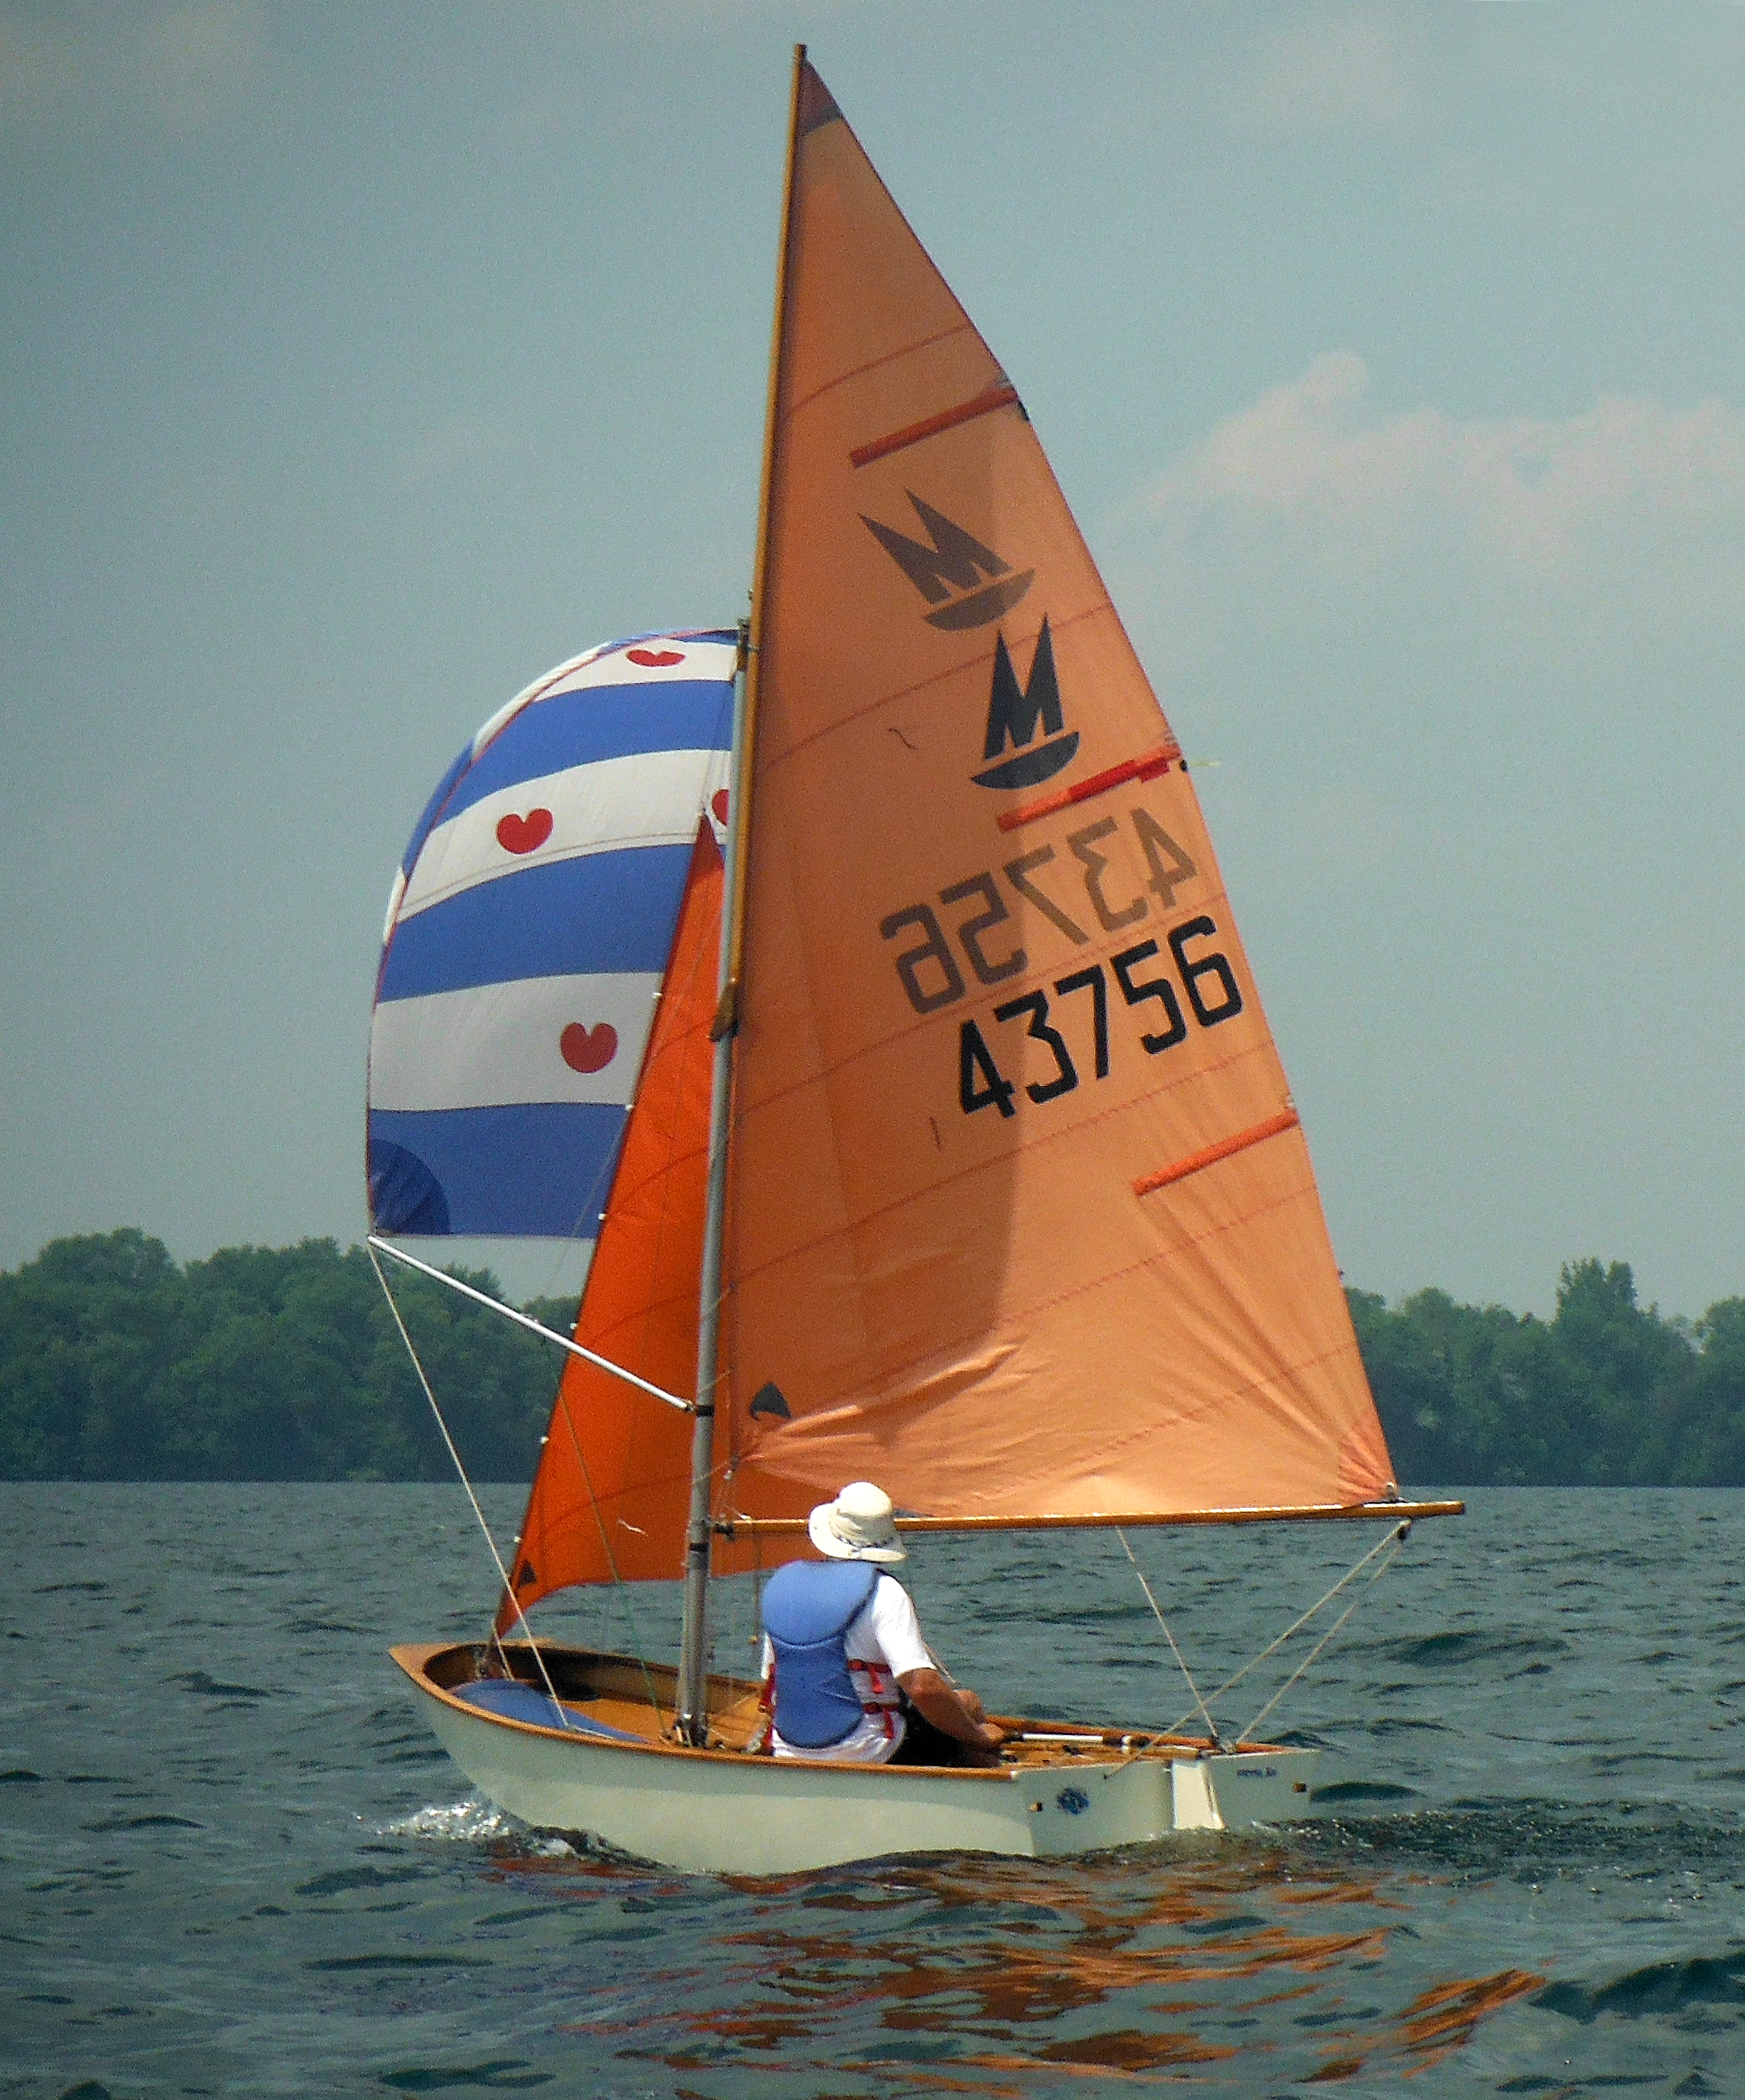 Carollza: Wooden dinghy boat kits